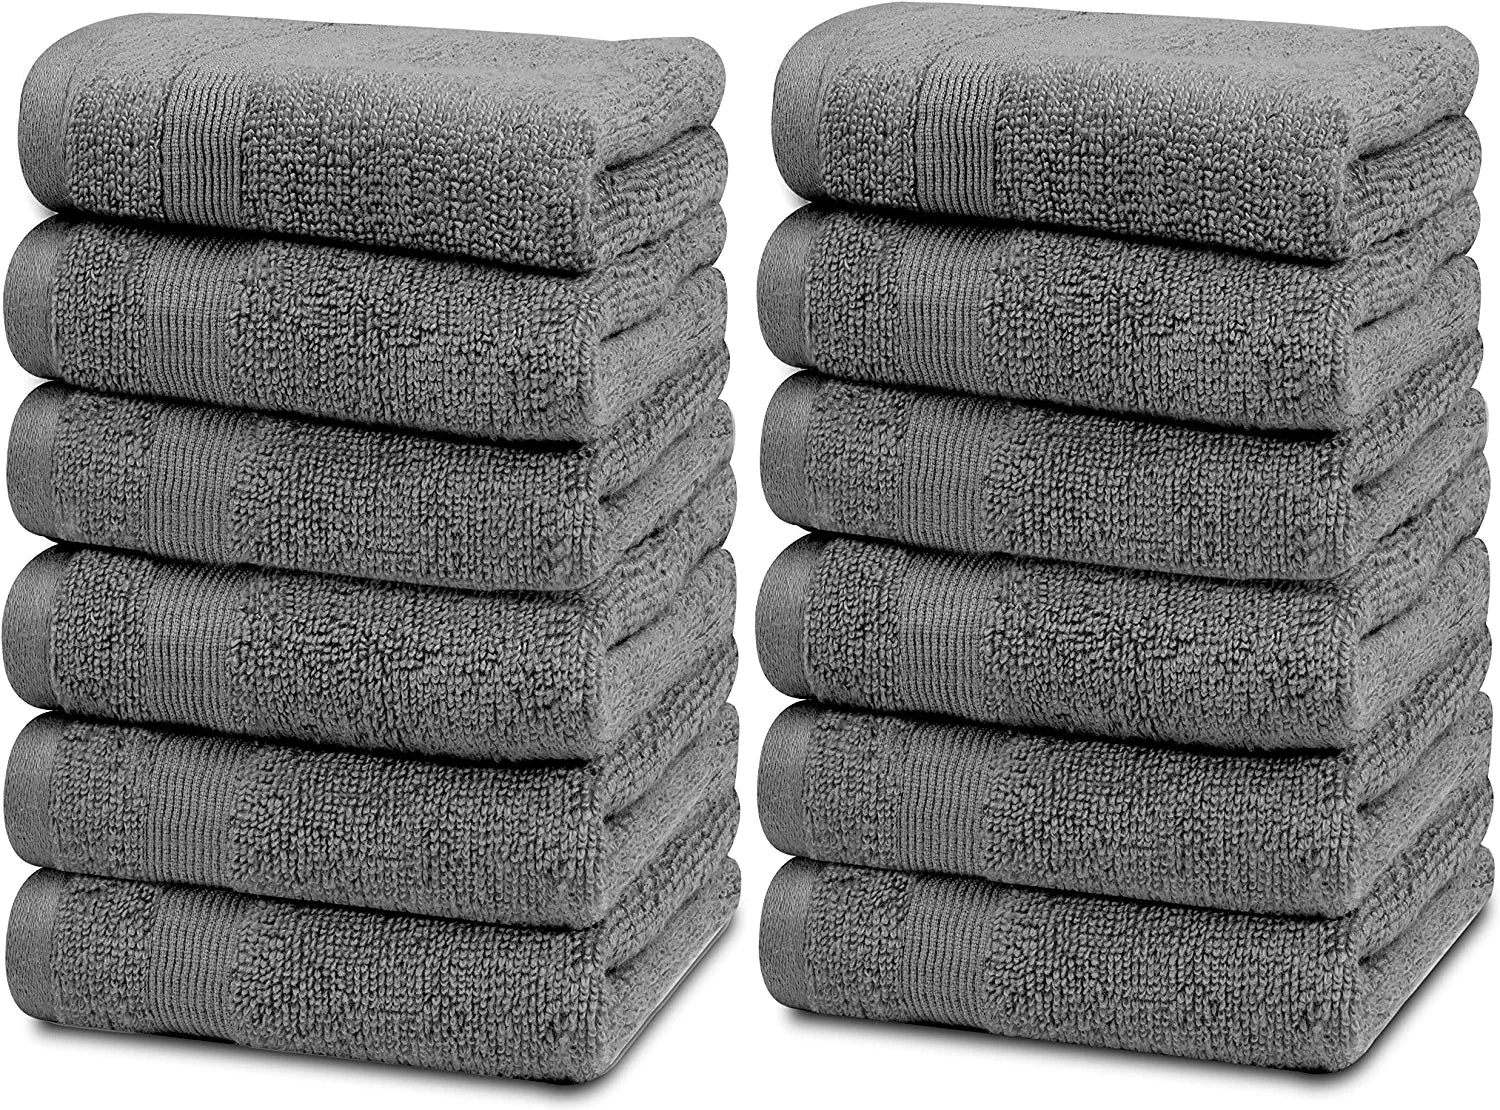 Resort Collection Gray Washcloths